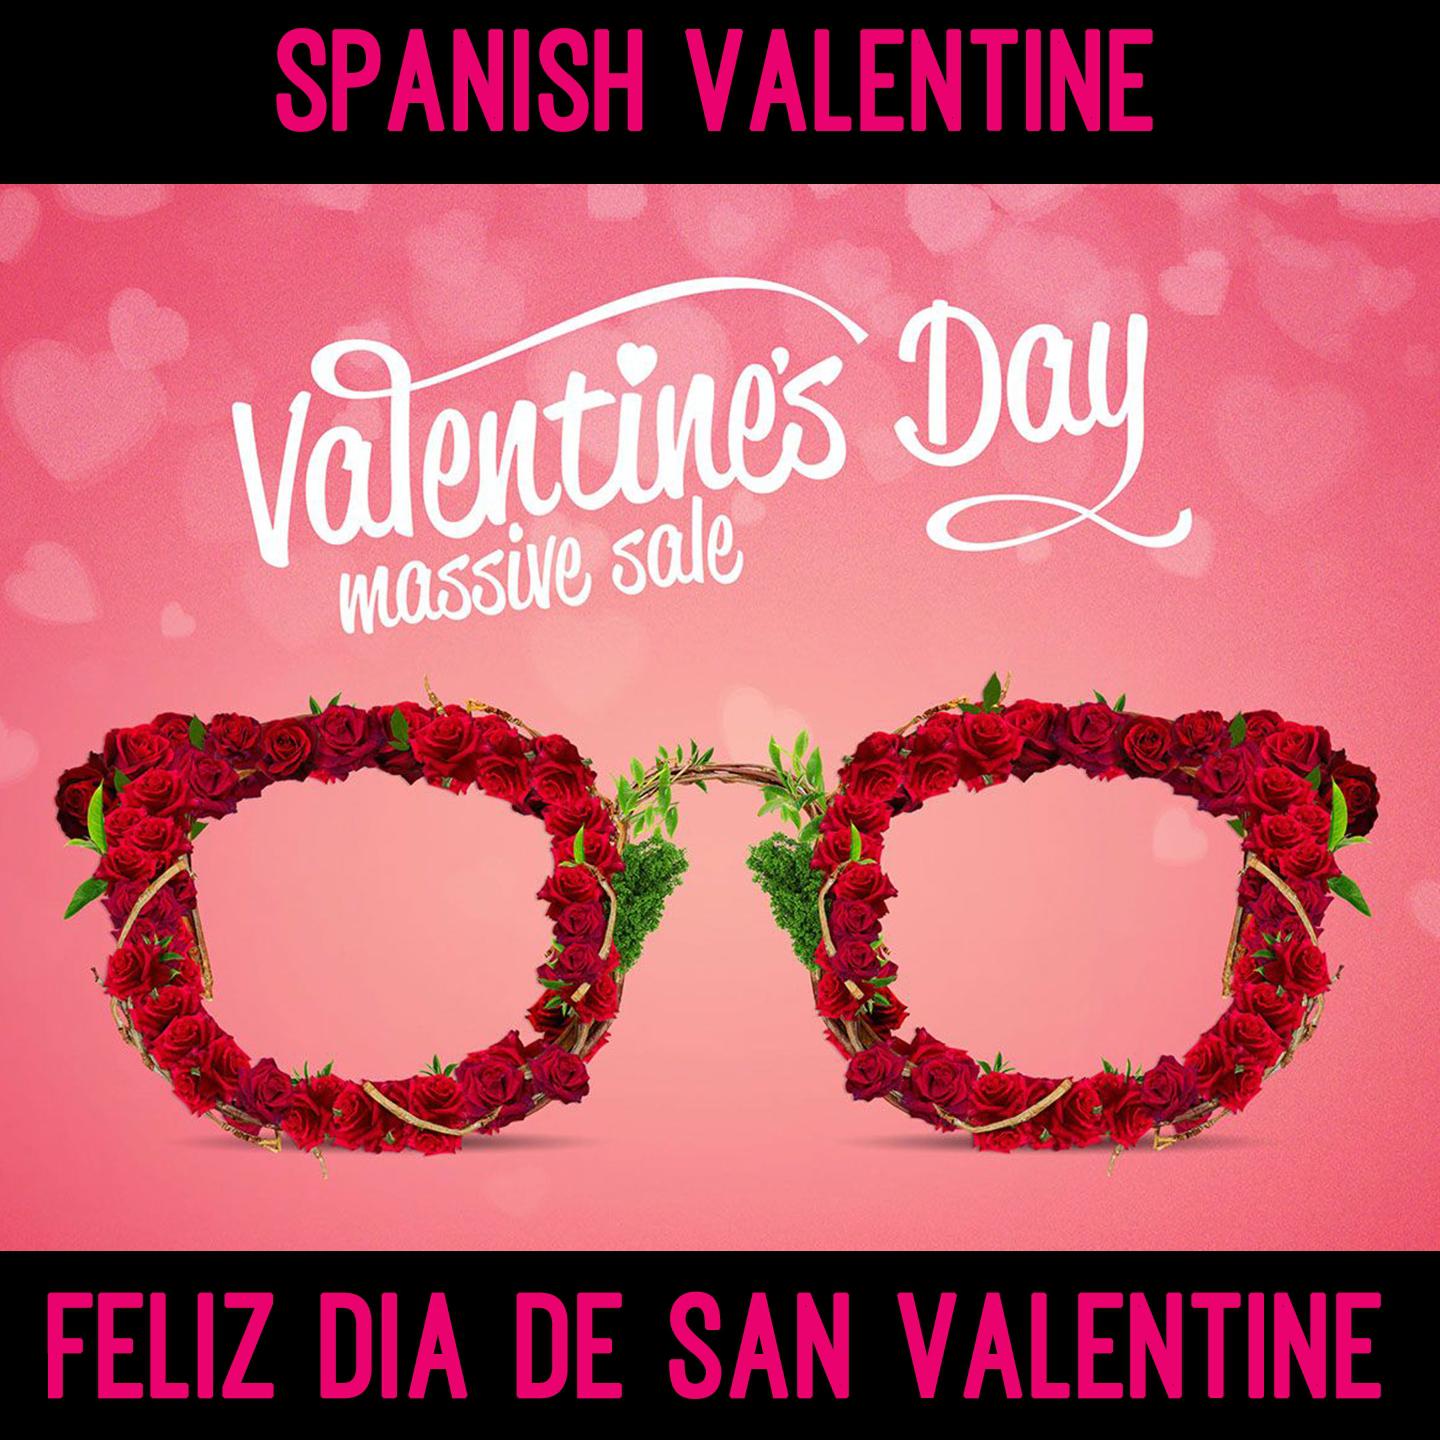 Spanish Valentine (Feliz Dia De San Valentin)